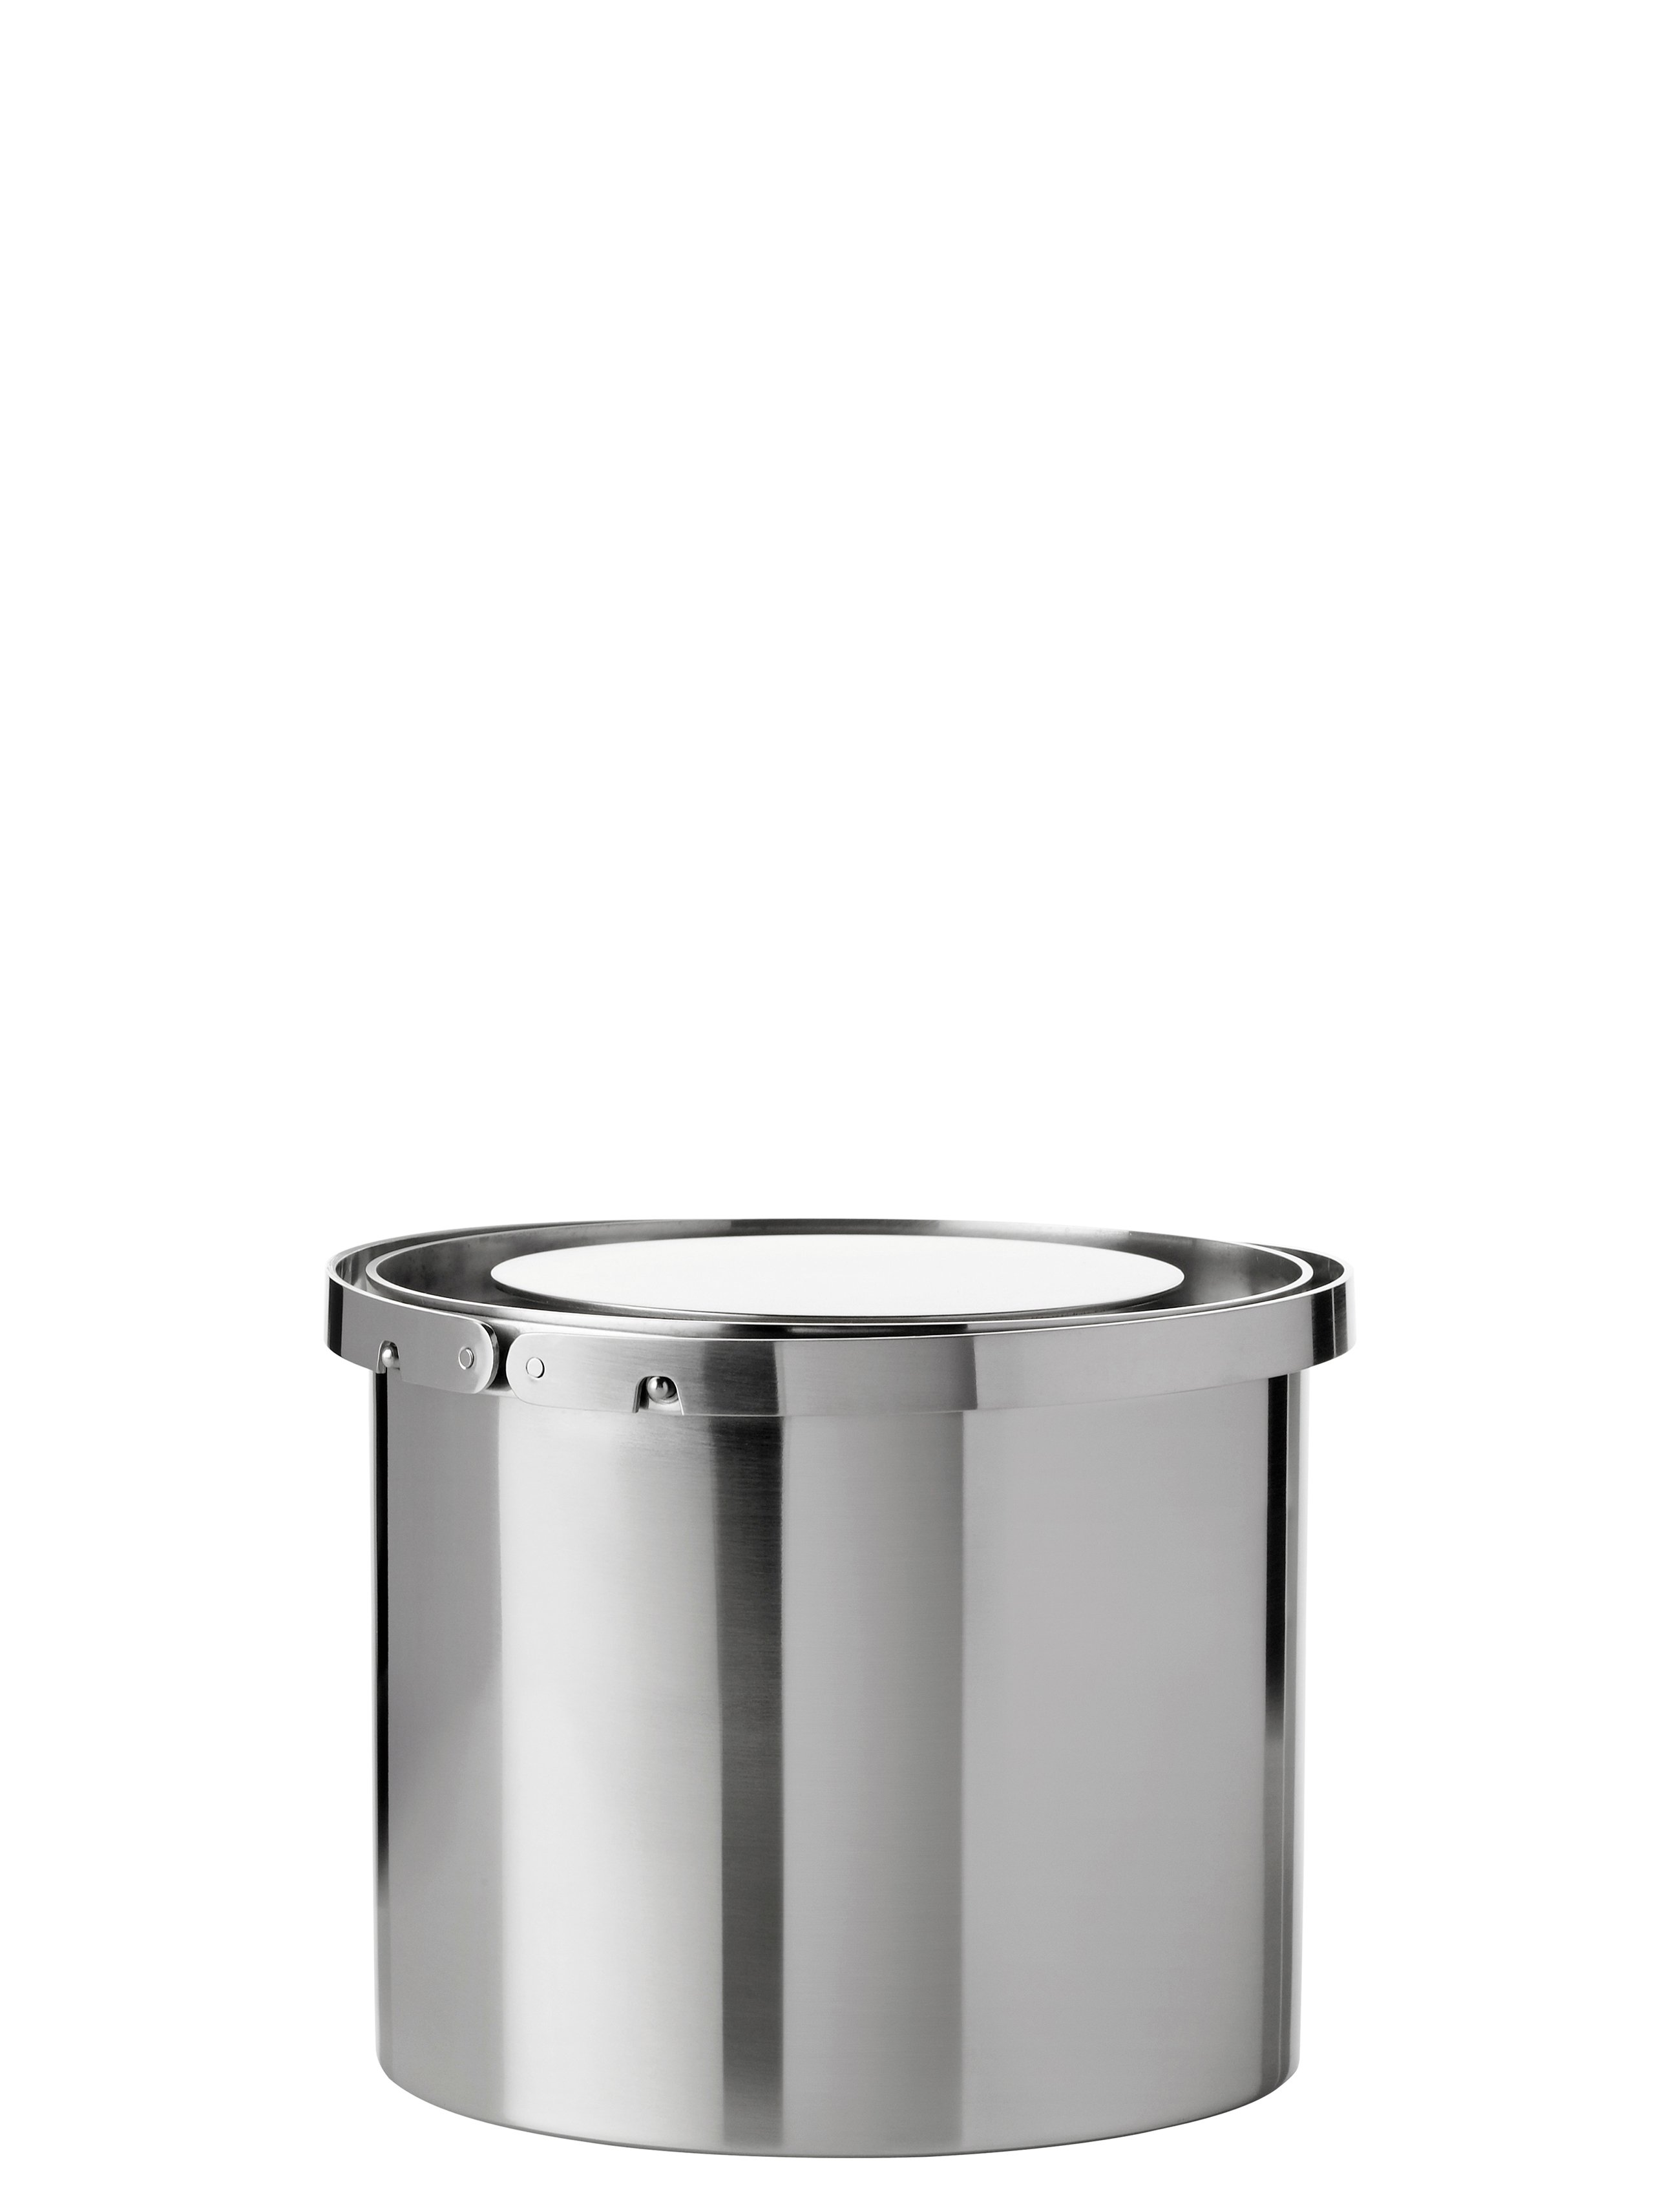 Stelton - Arne Jacobsen Isspand 1 L